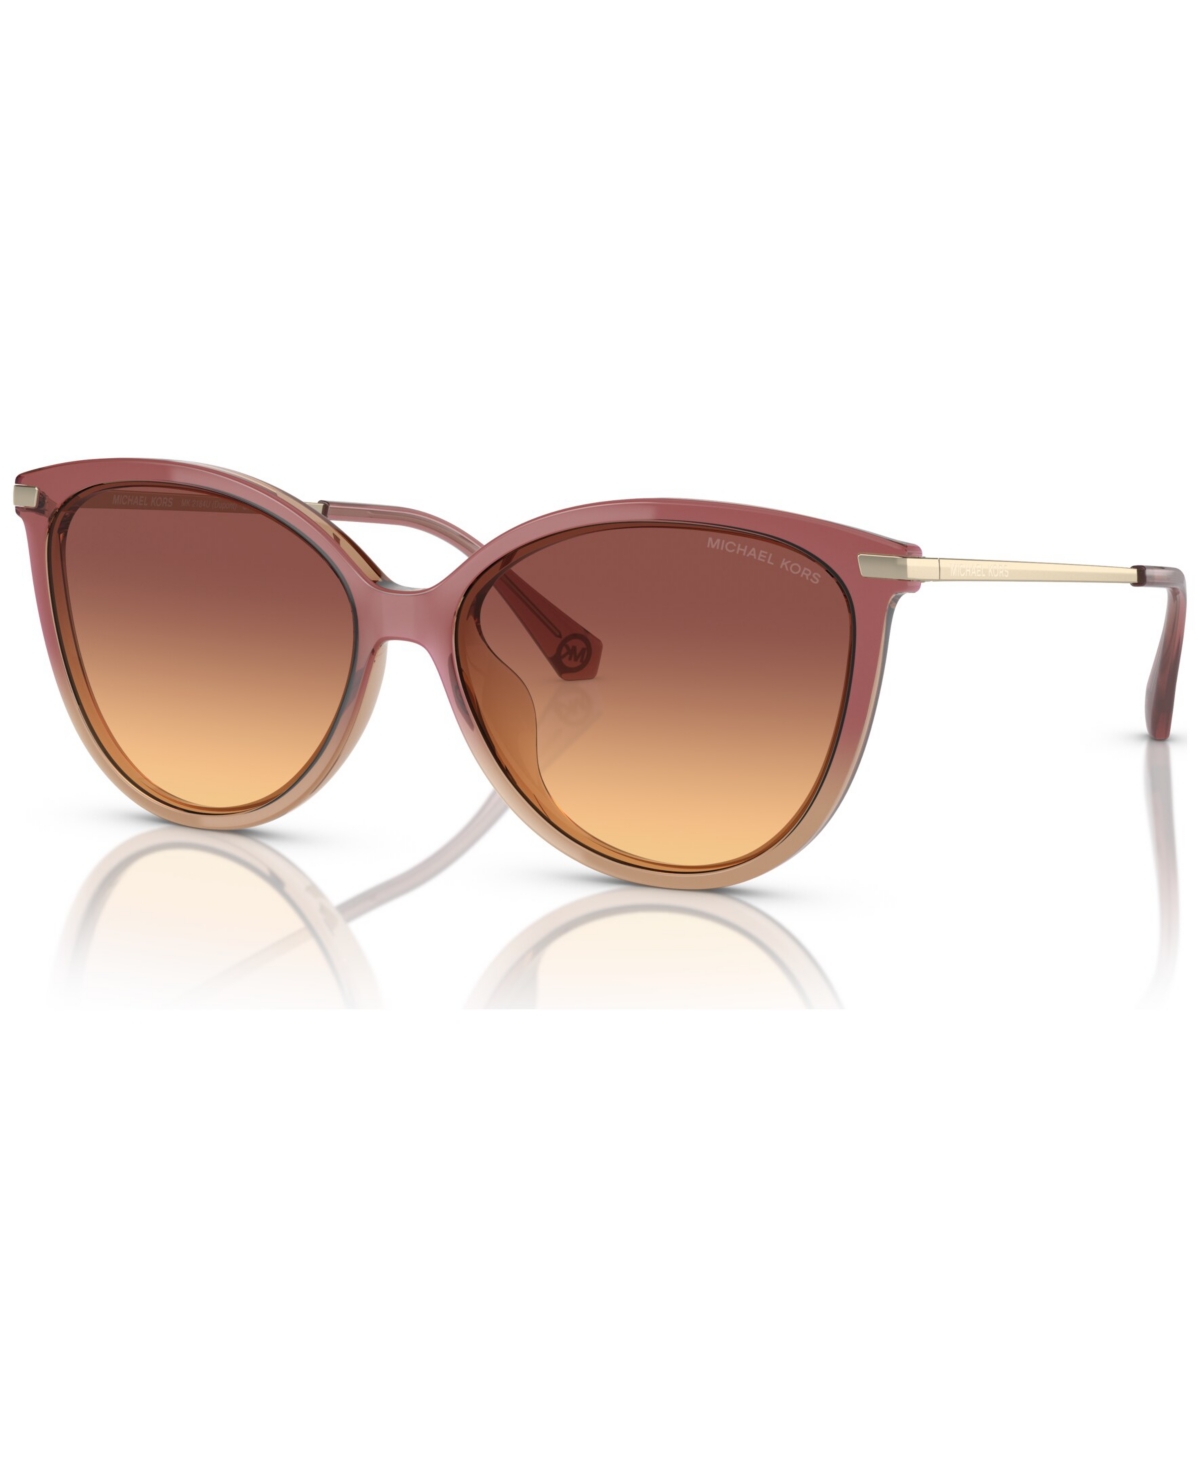 Shop Michael Kors Women's Sunglasses, Dupont In Dusty Rose Light Brown